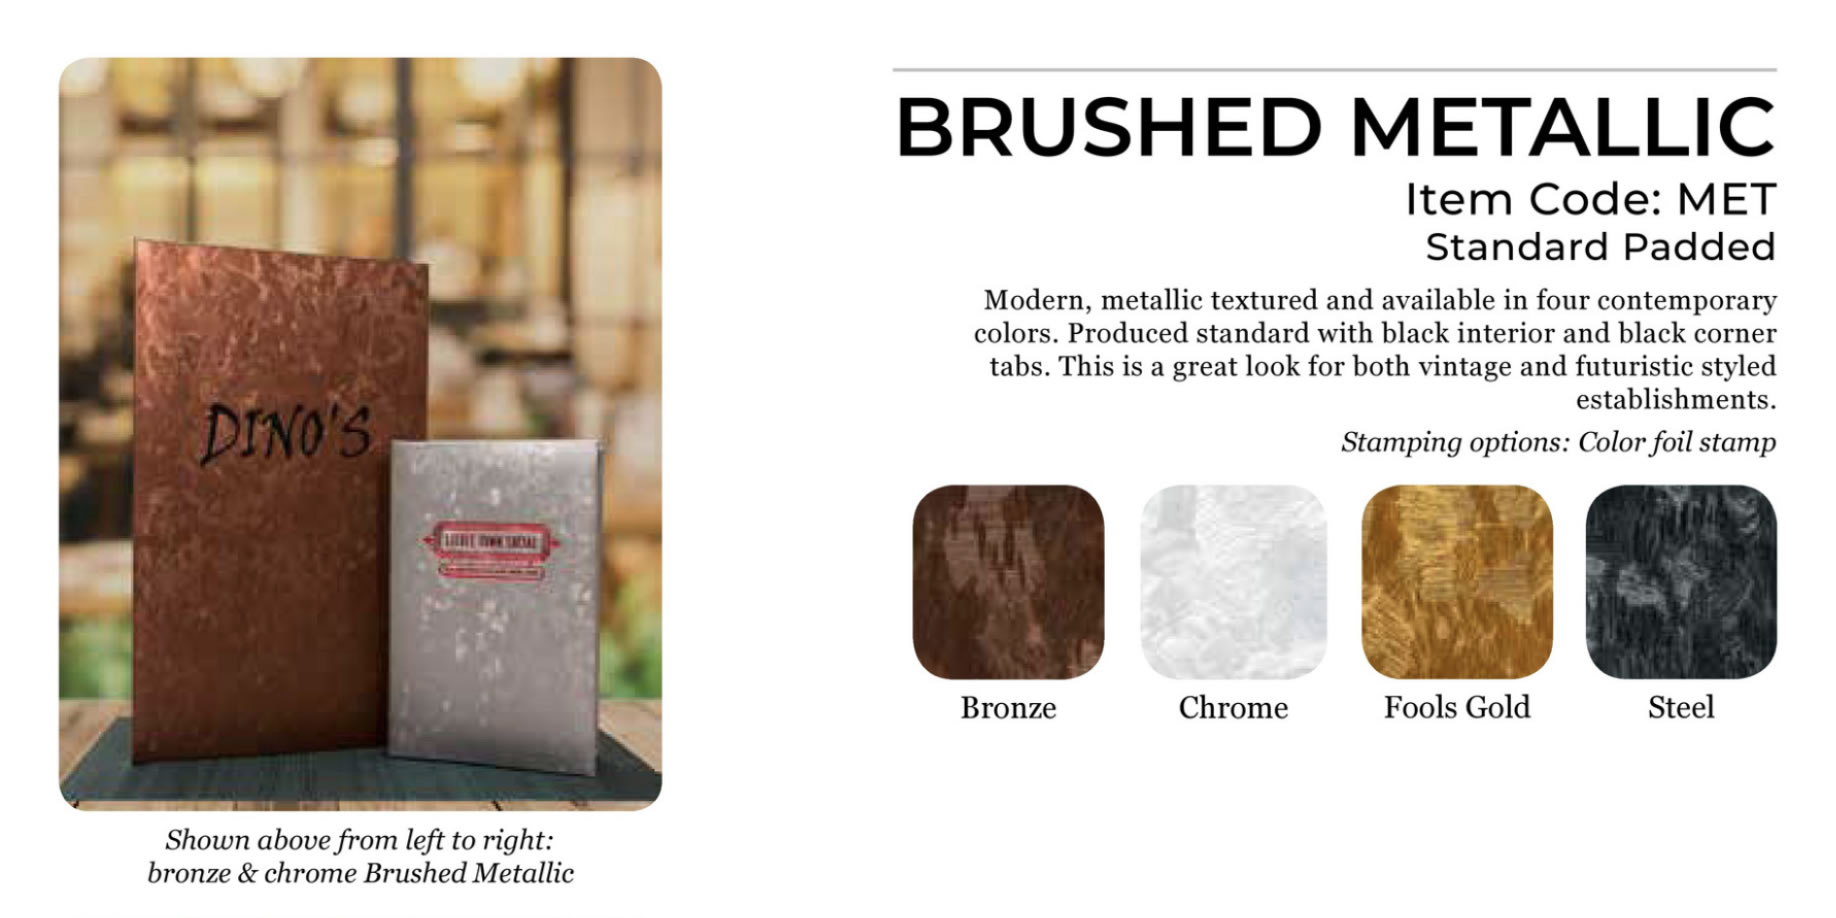 Brushed Metallics impart a powerful dynamic.